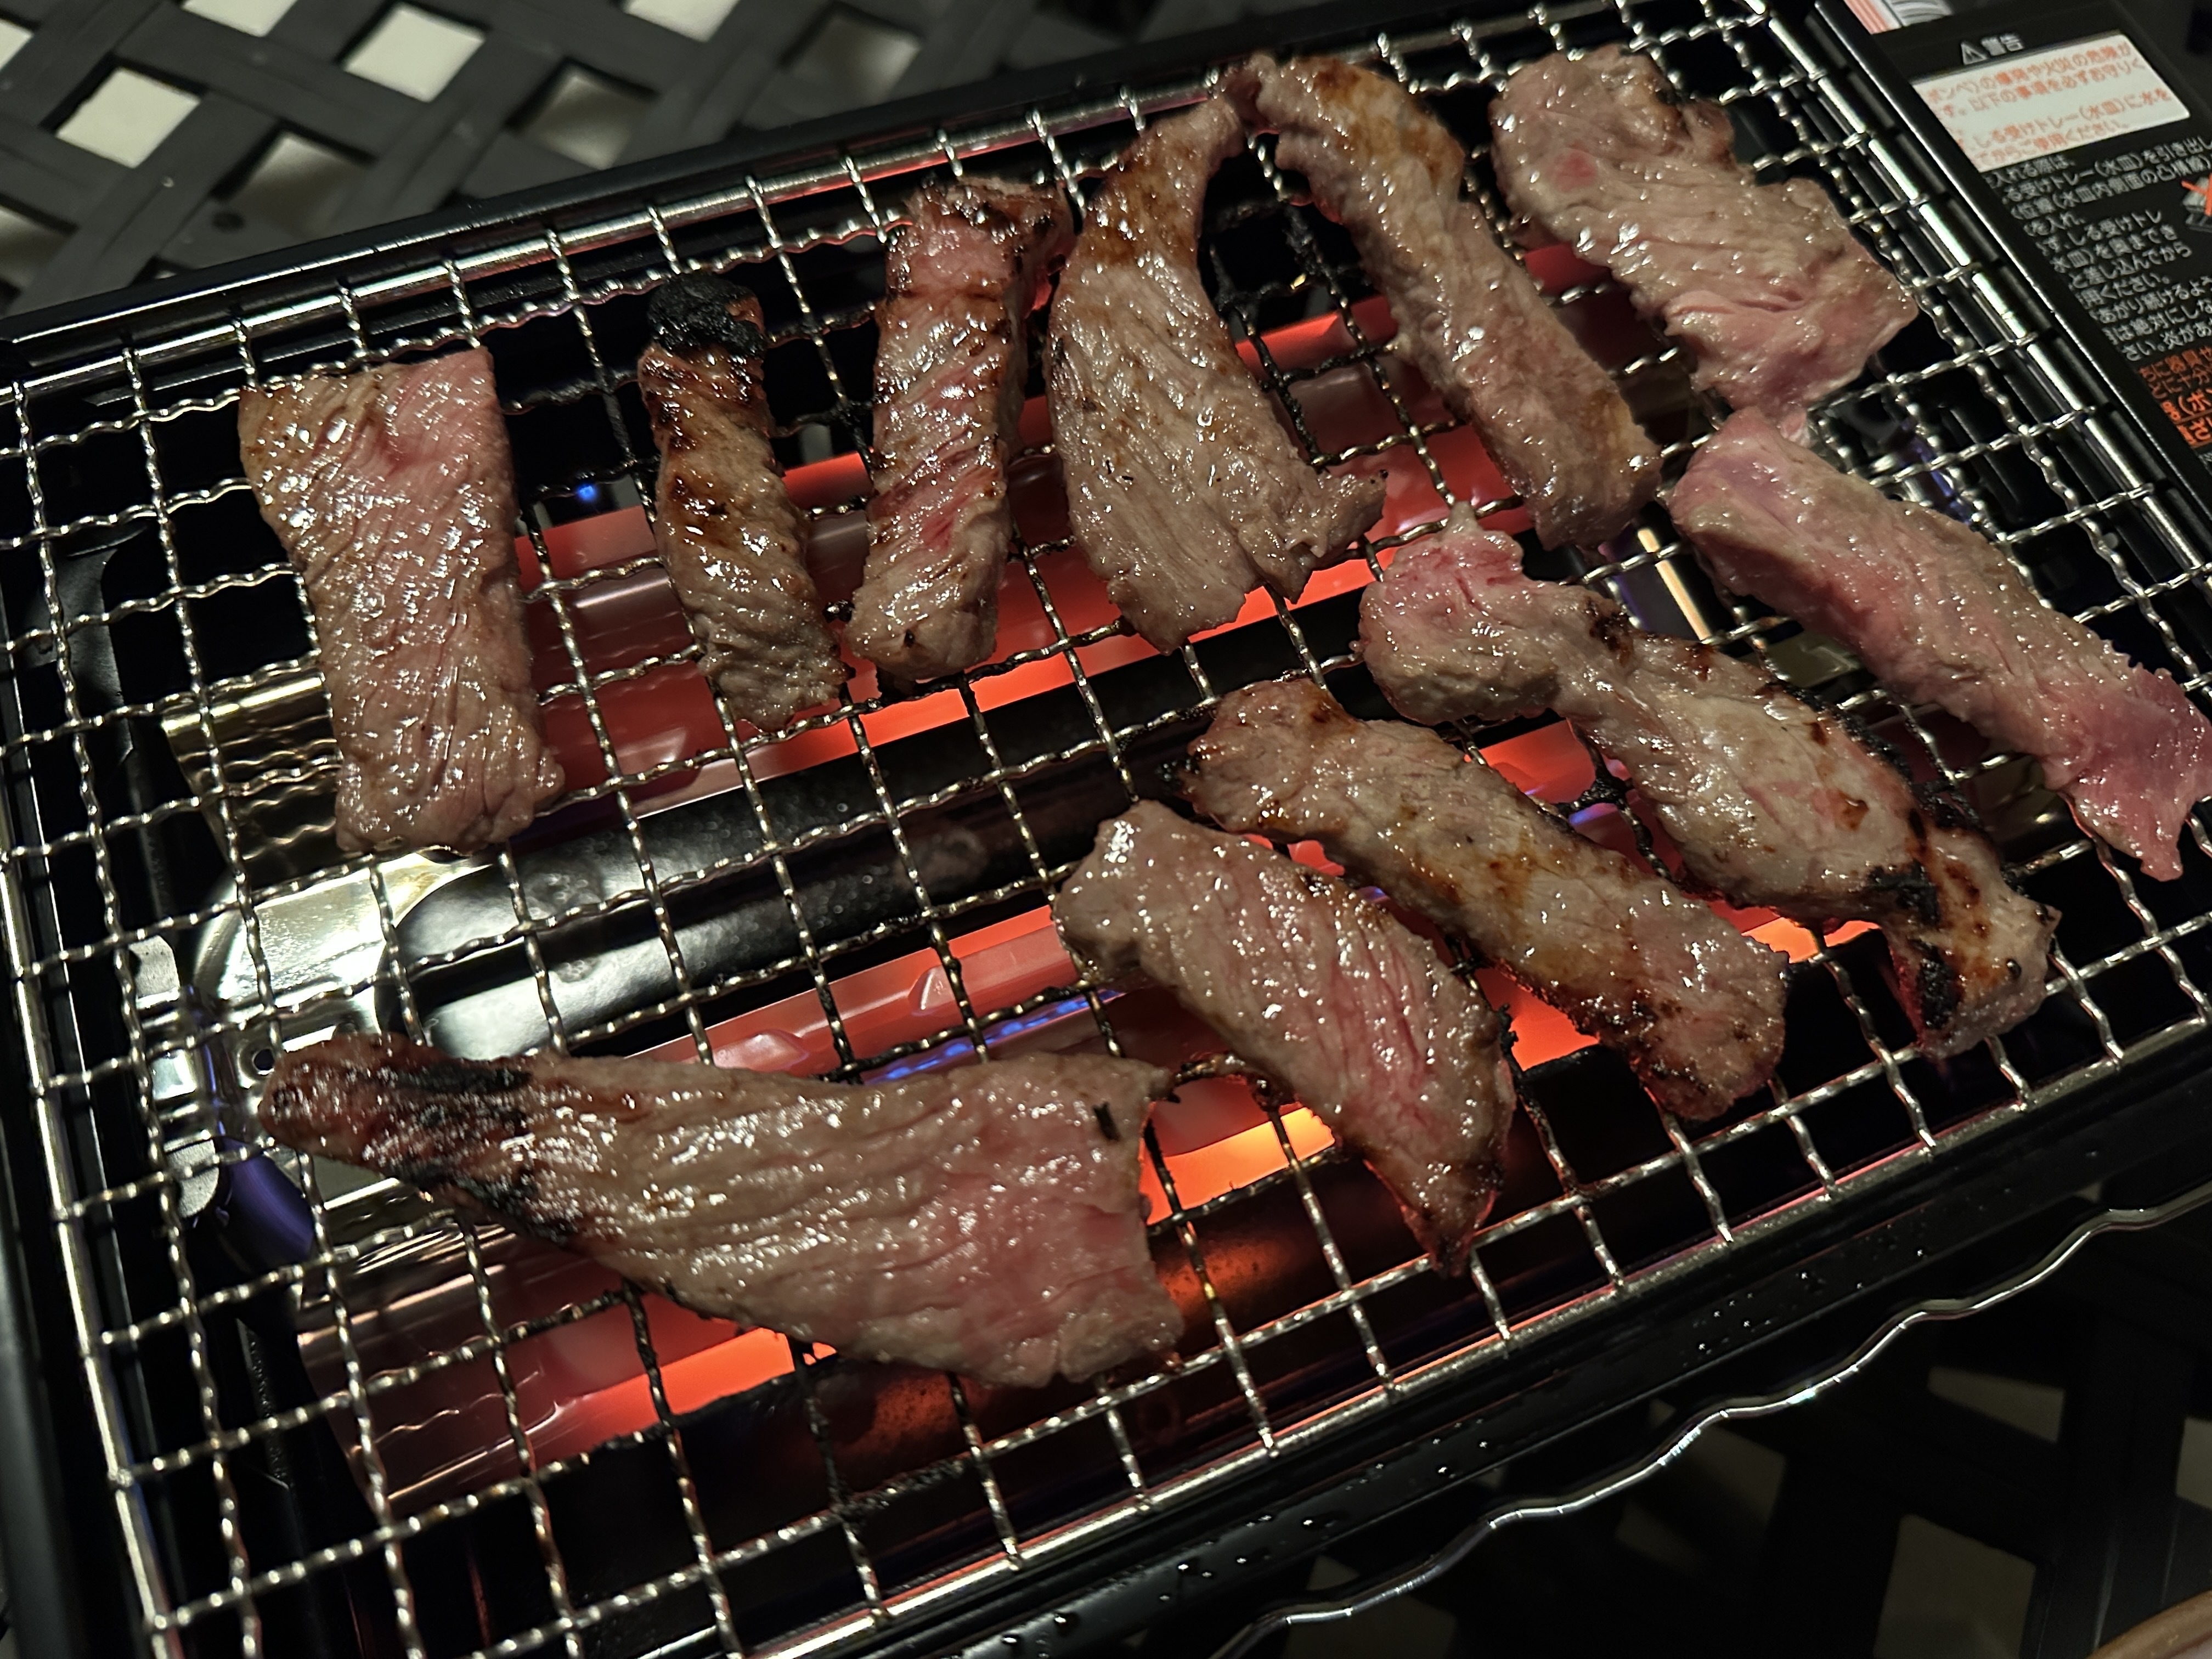 Testing the Iwatani Smokeless Indoor Grill 